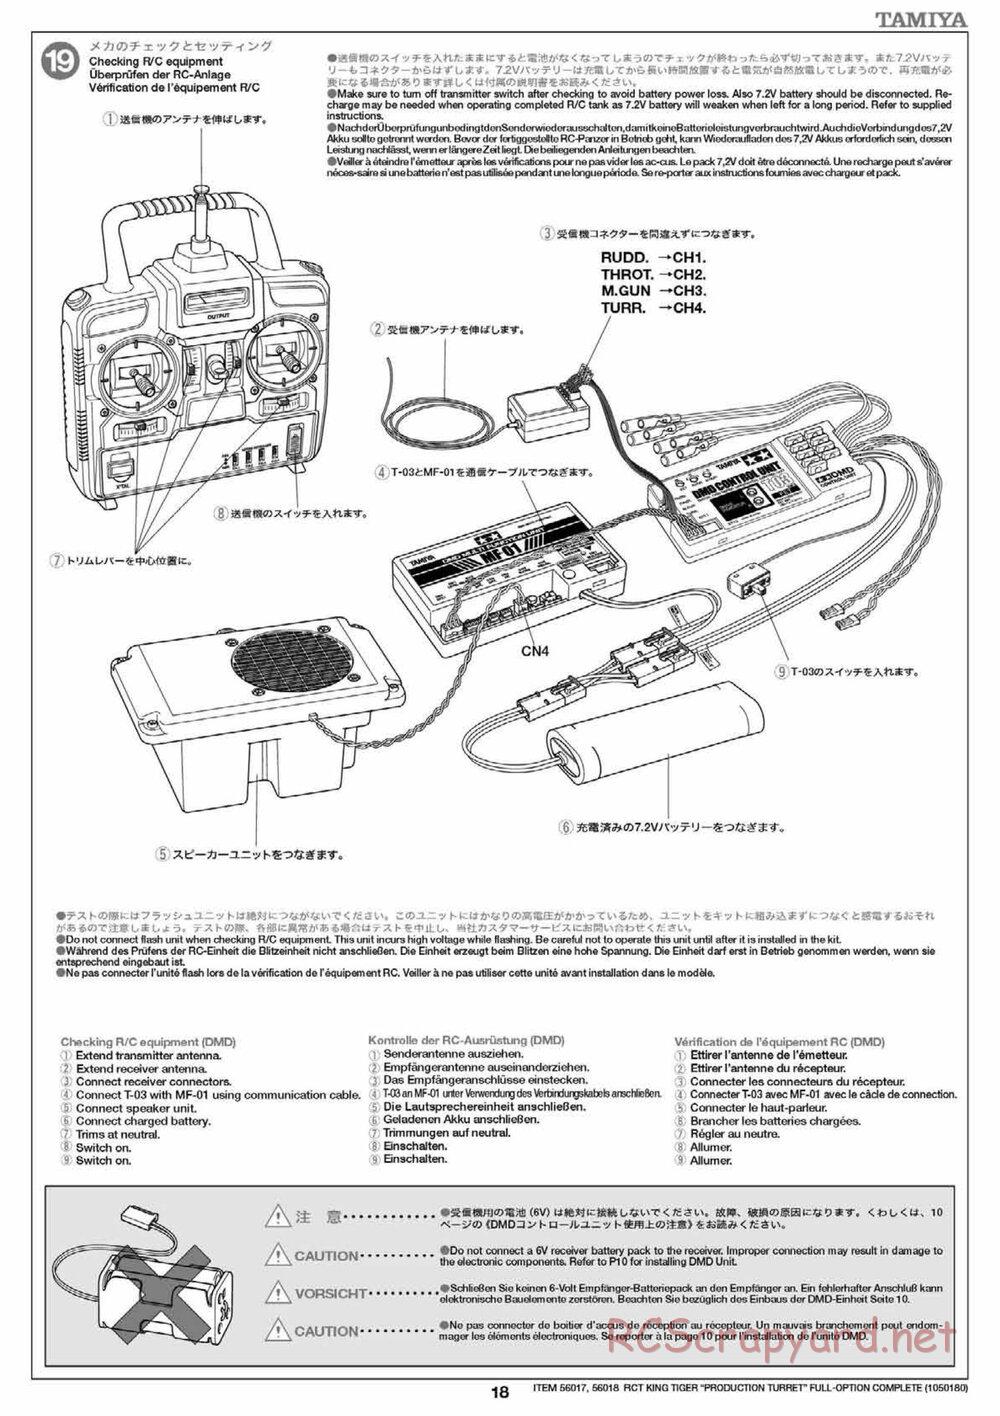 Tamiya - King Tiger - 1/16 Scale Chassis - Manual - Page 18